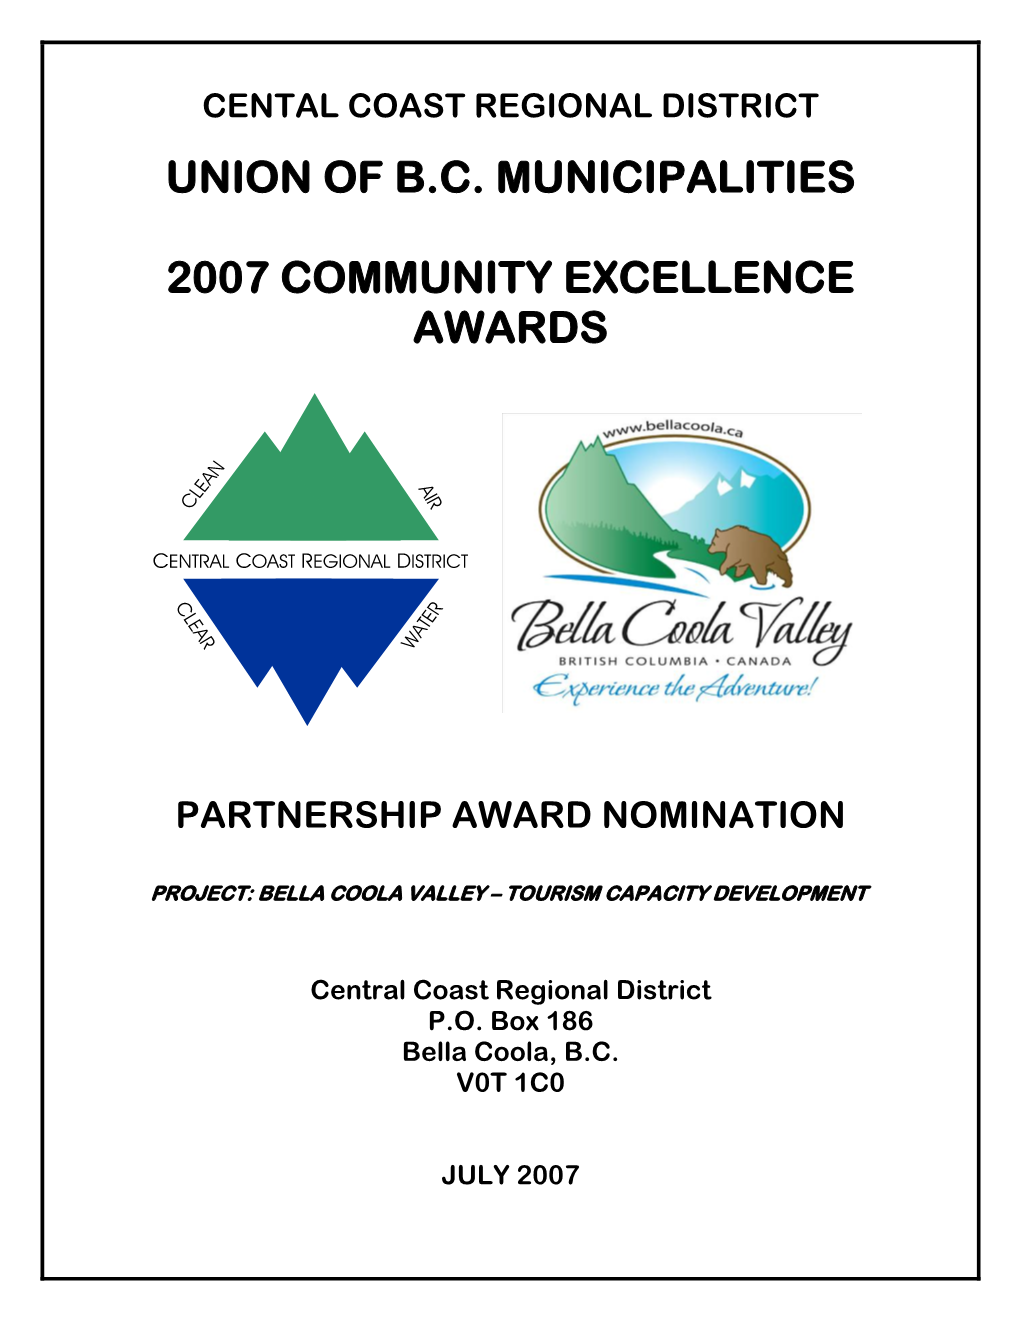 Union of B.C. Municipalities 2007 Community Excellence